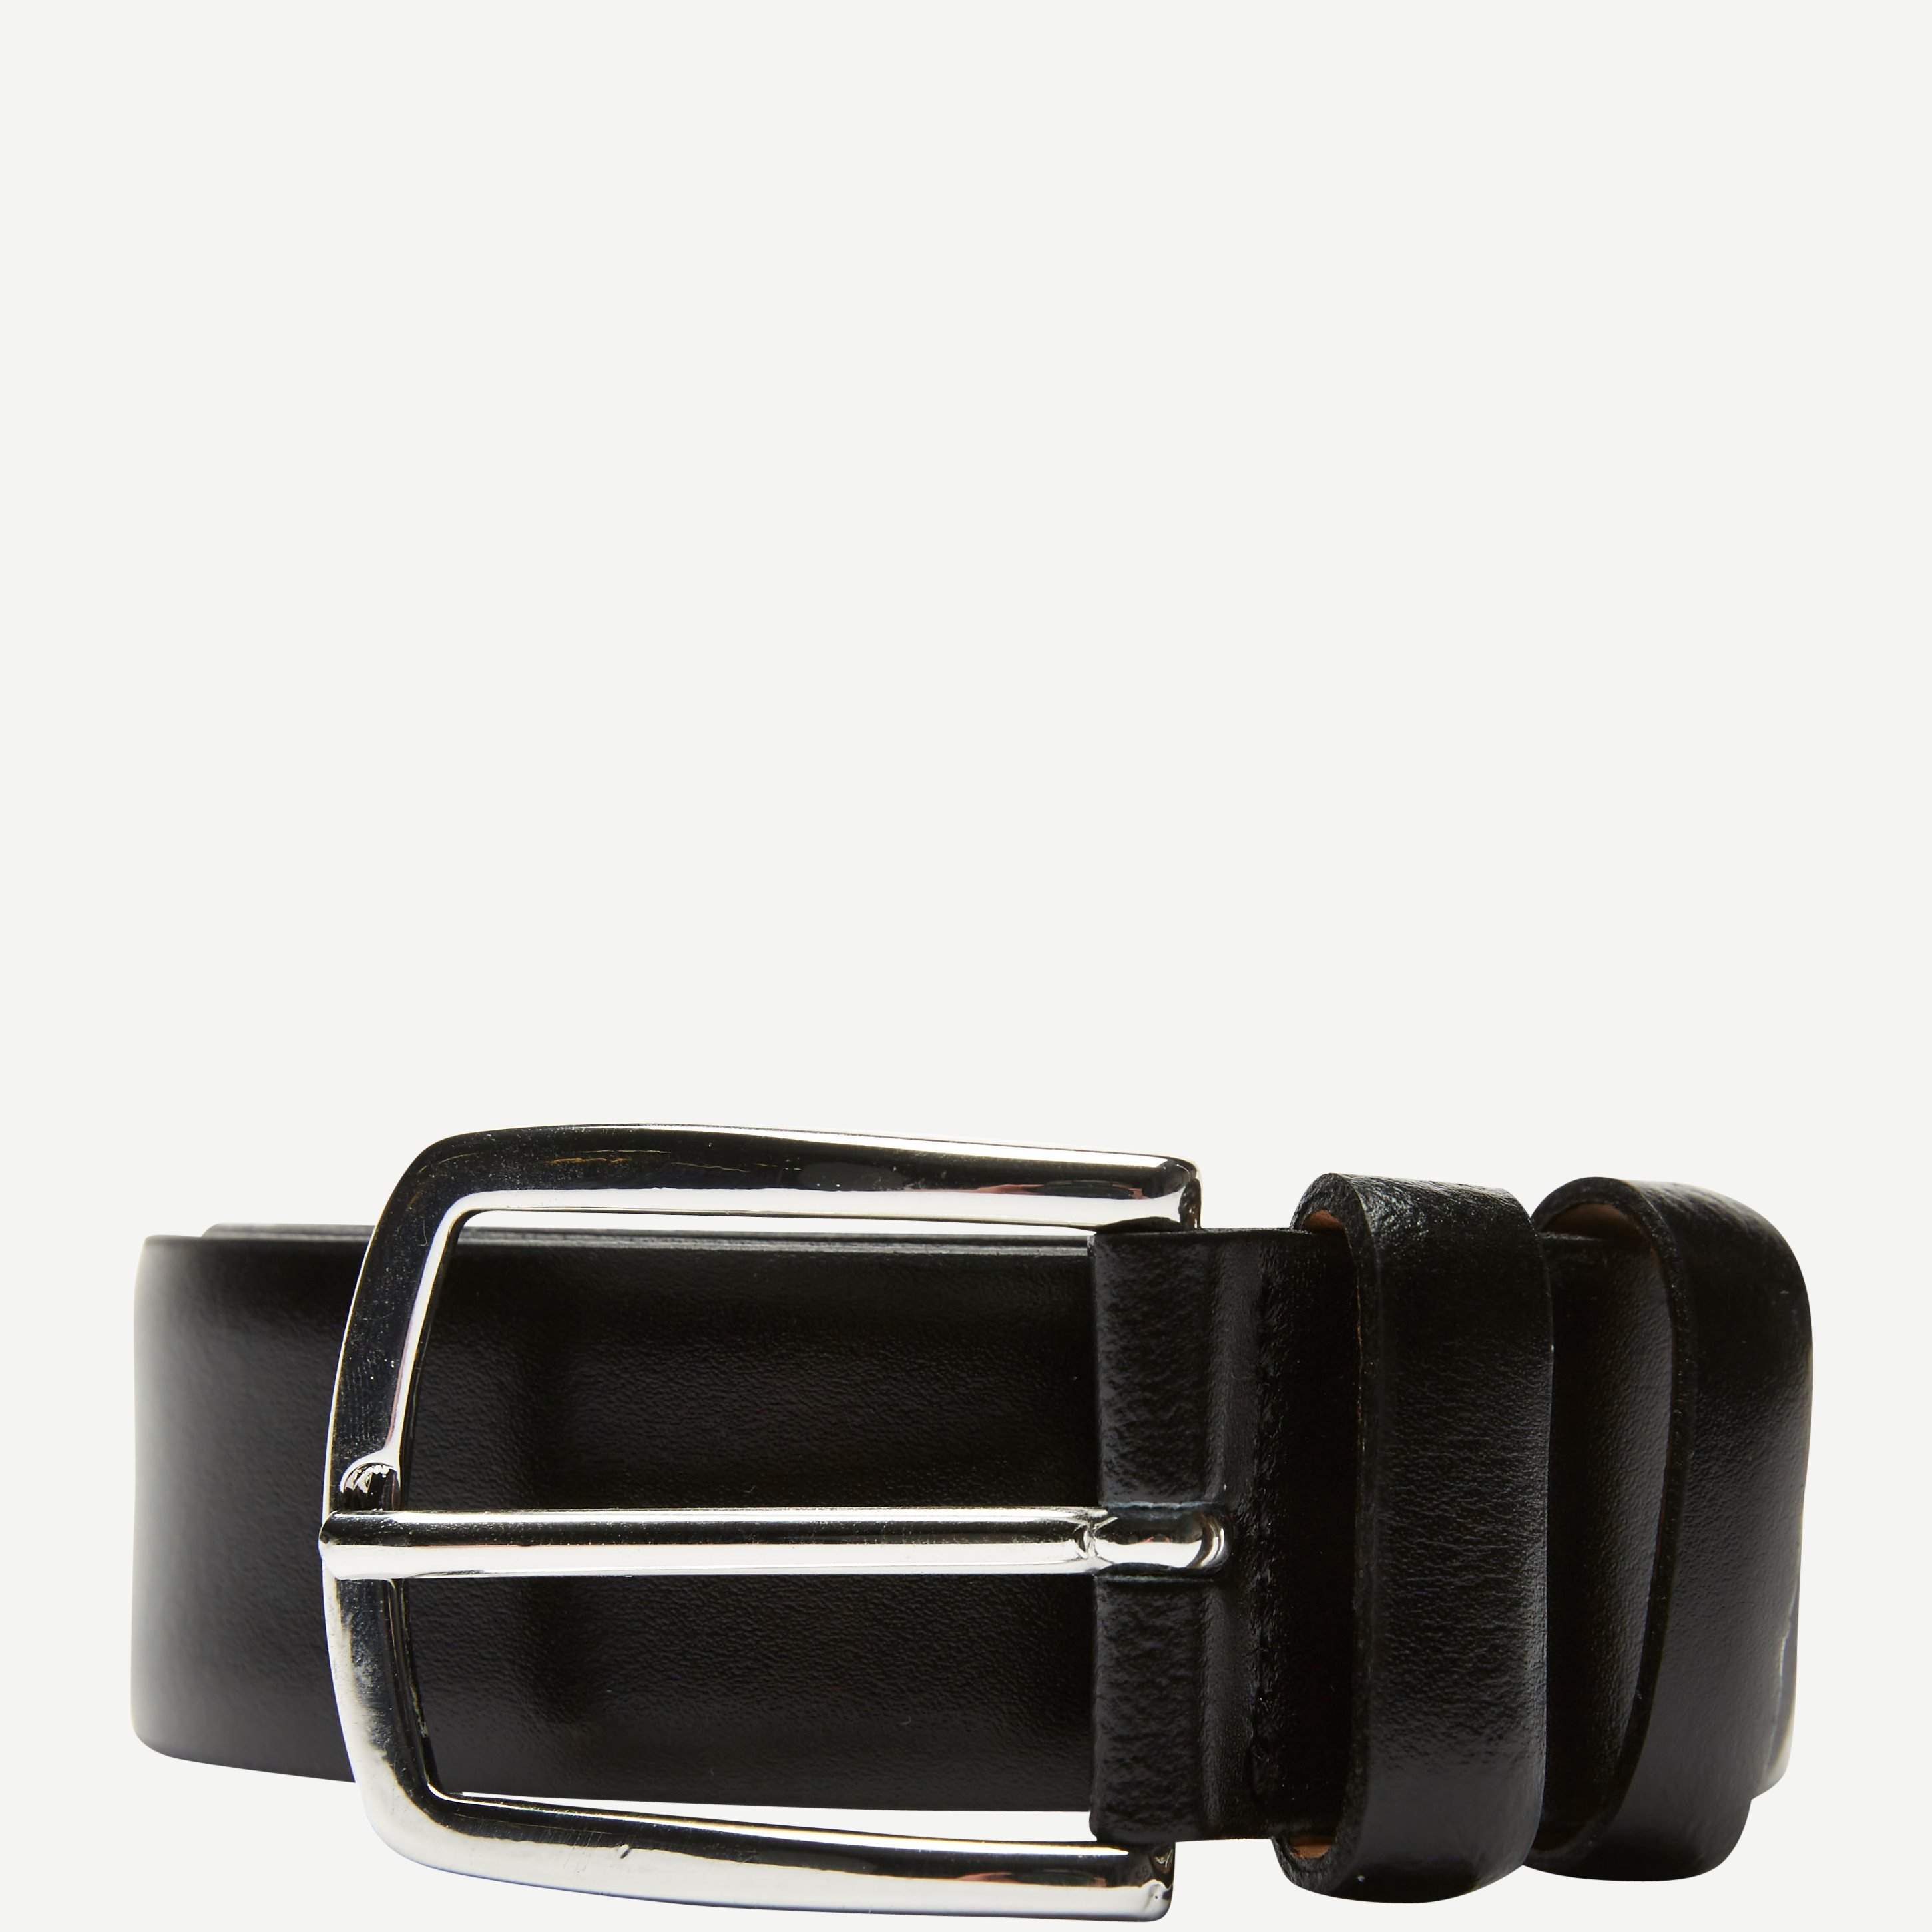 Philipsons Belts 15030 Black